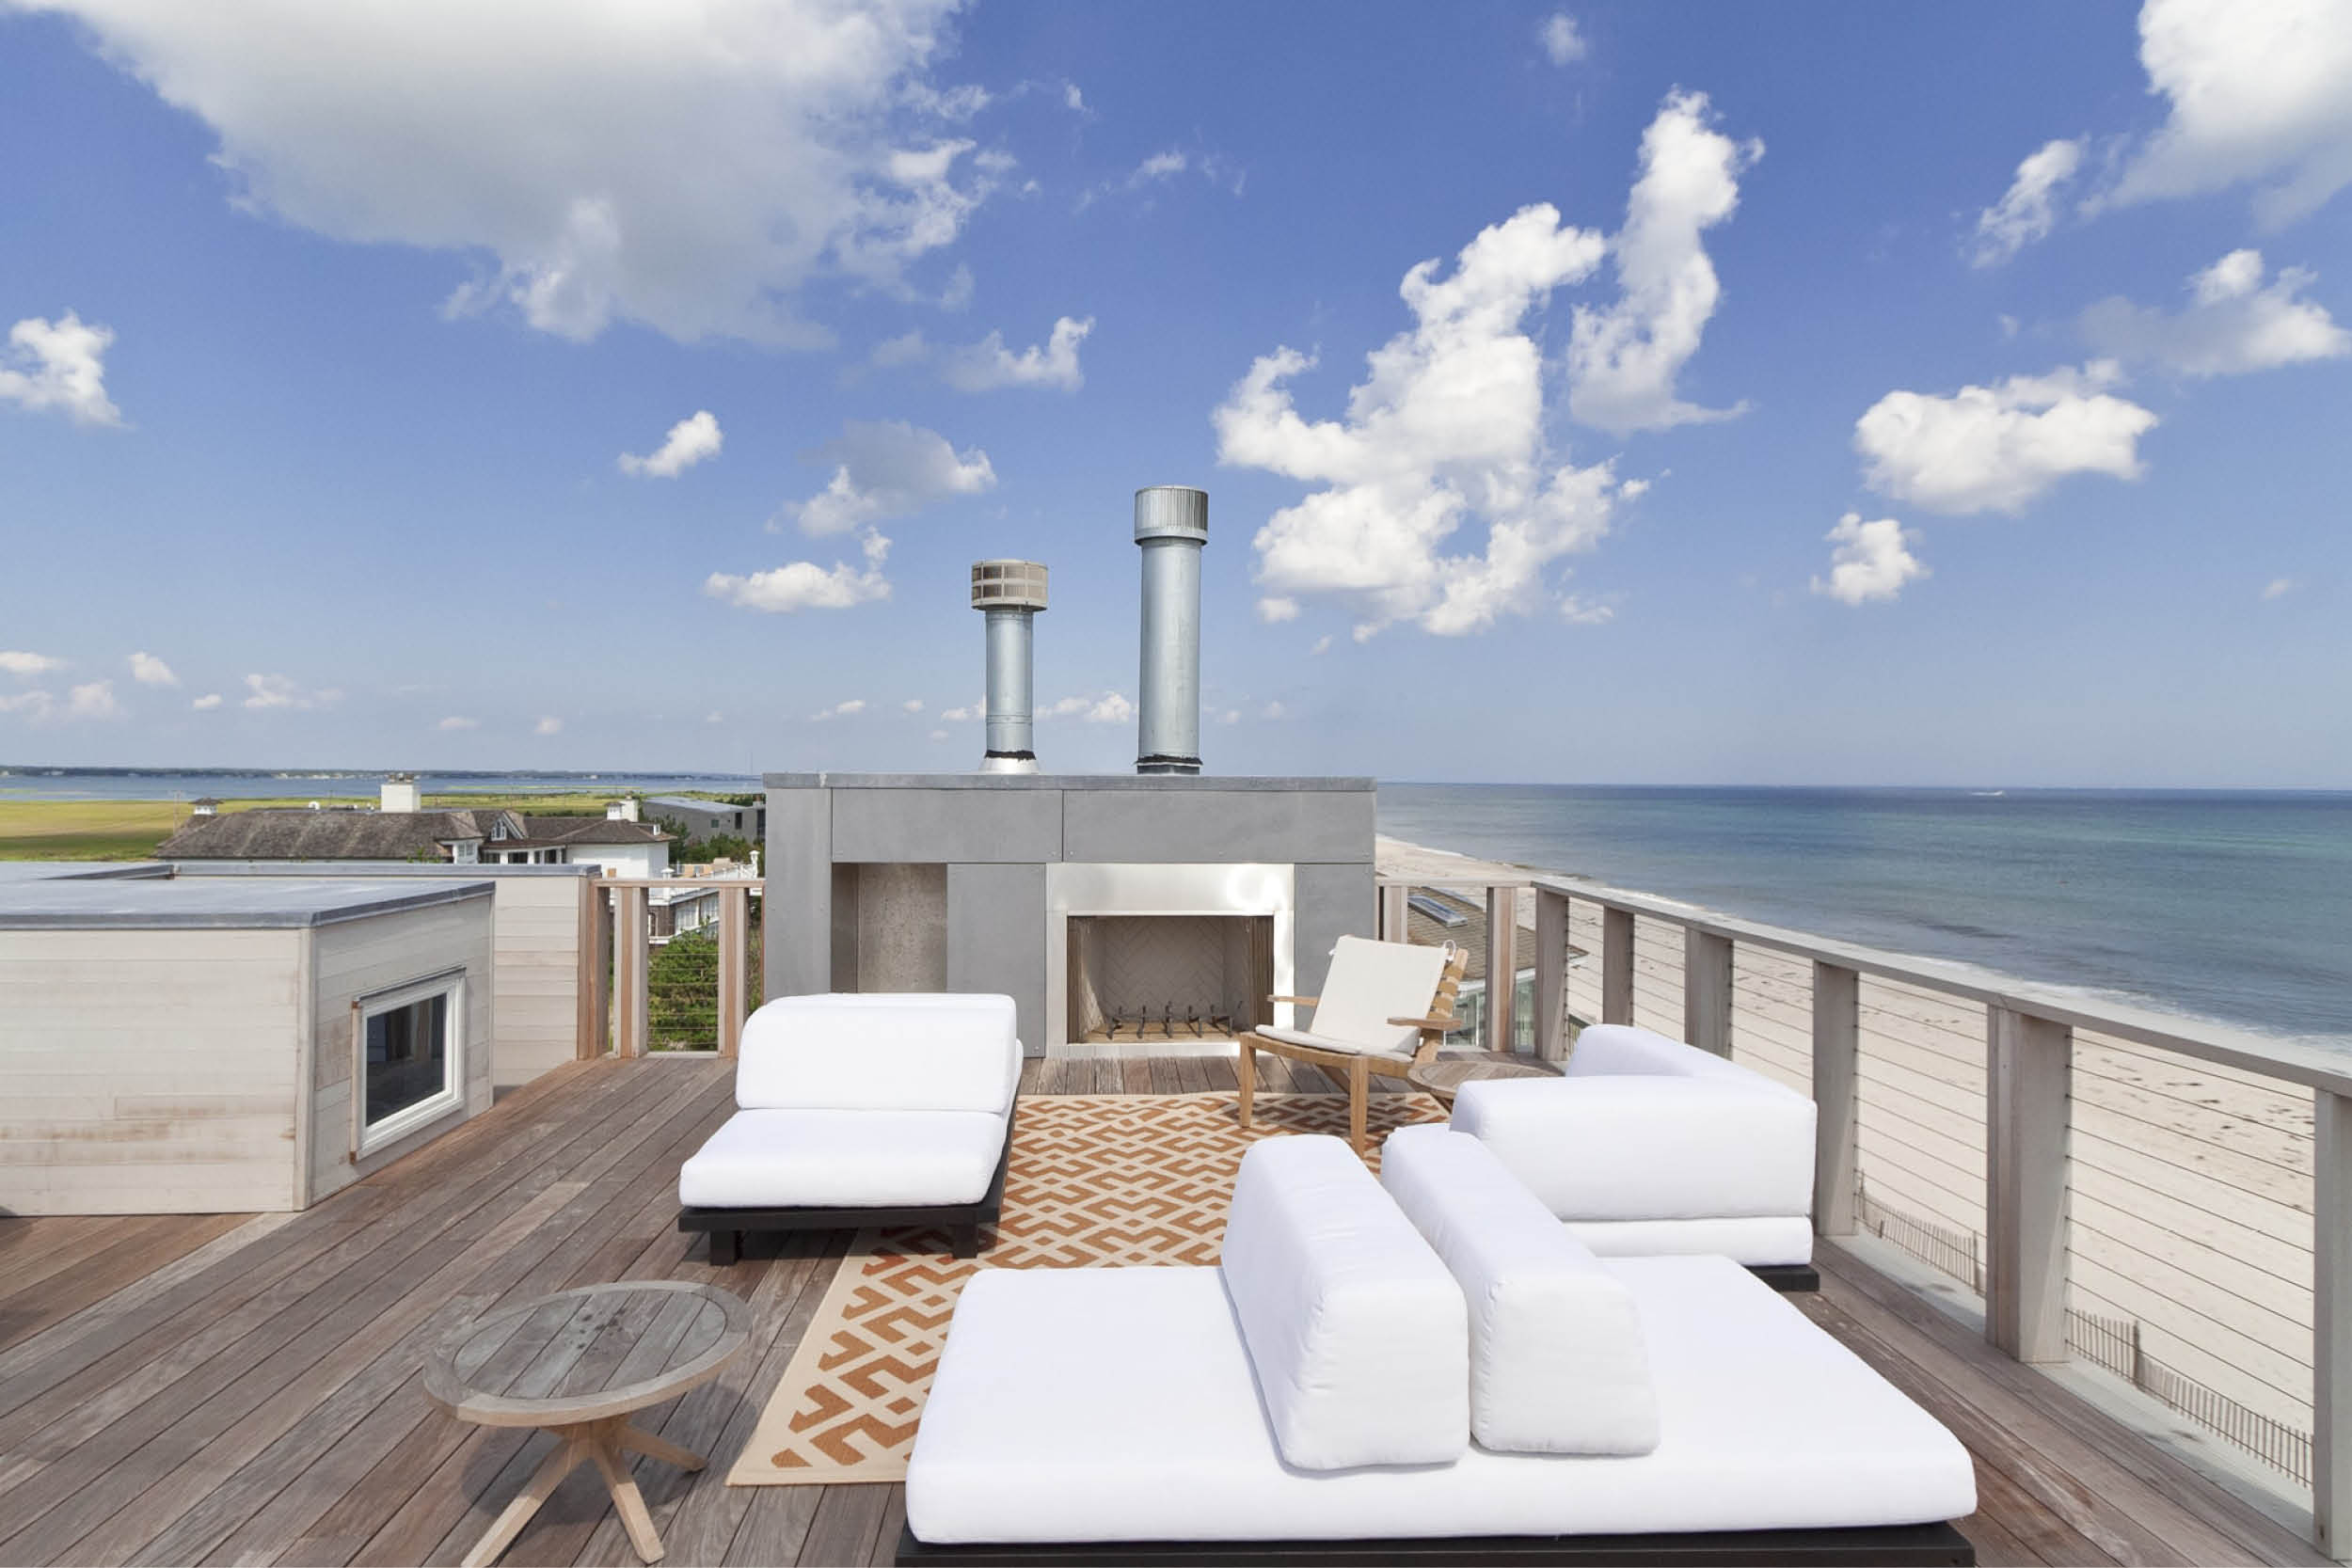 16-res4-resolution-4-architecture-modern-modular-home-prefab-dune-road-beach-house-exterior-deck.jpg